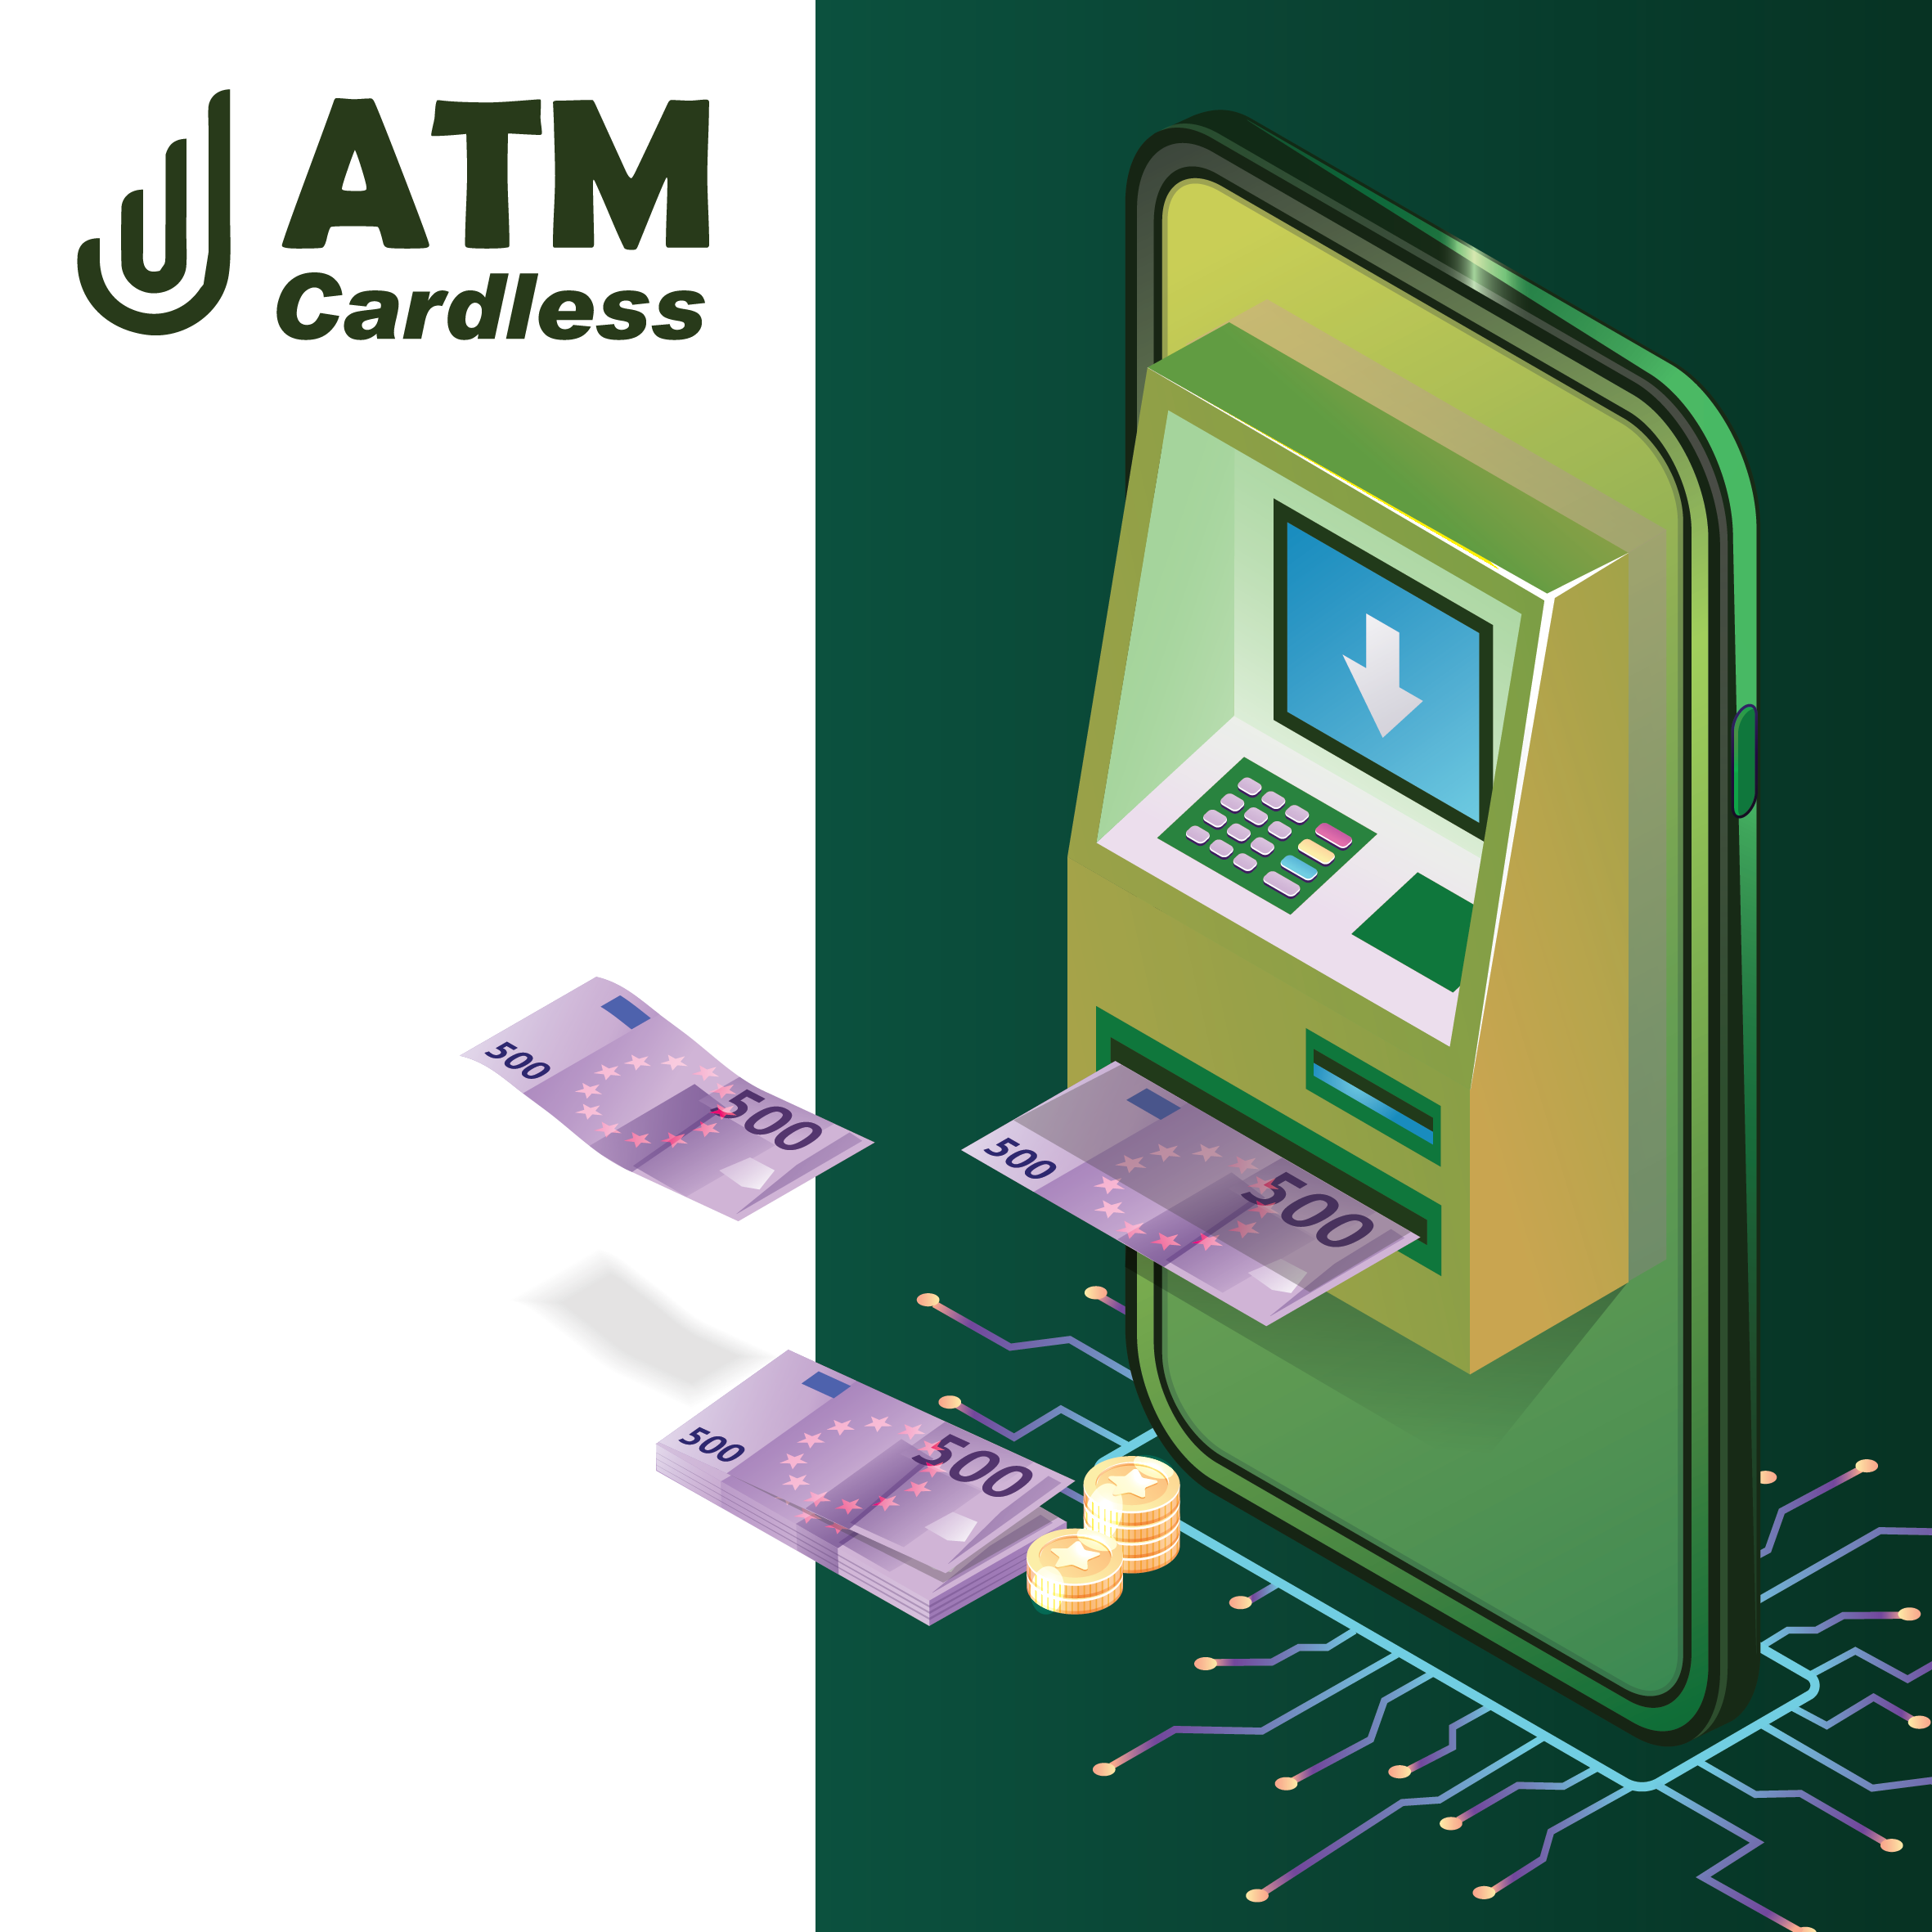 ATM CARDLESS Bank Jombang